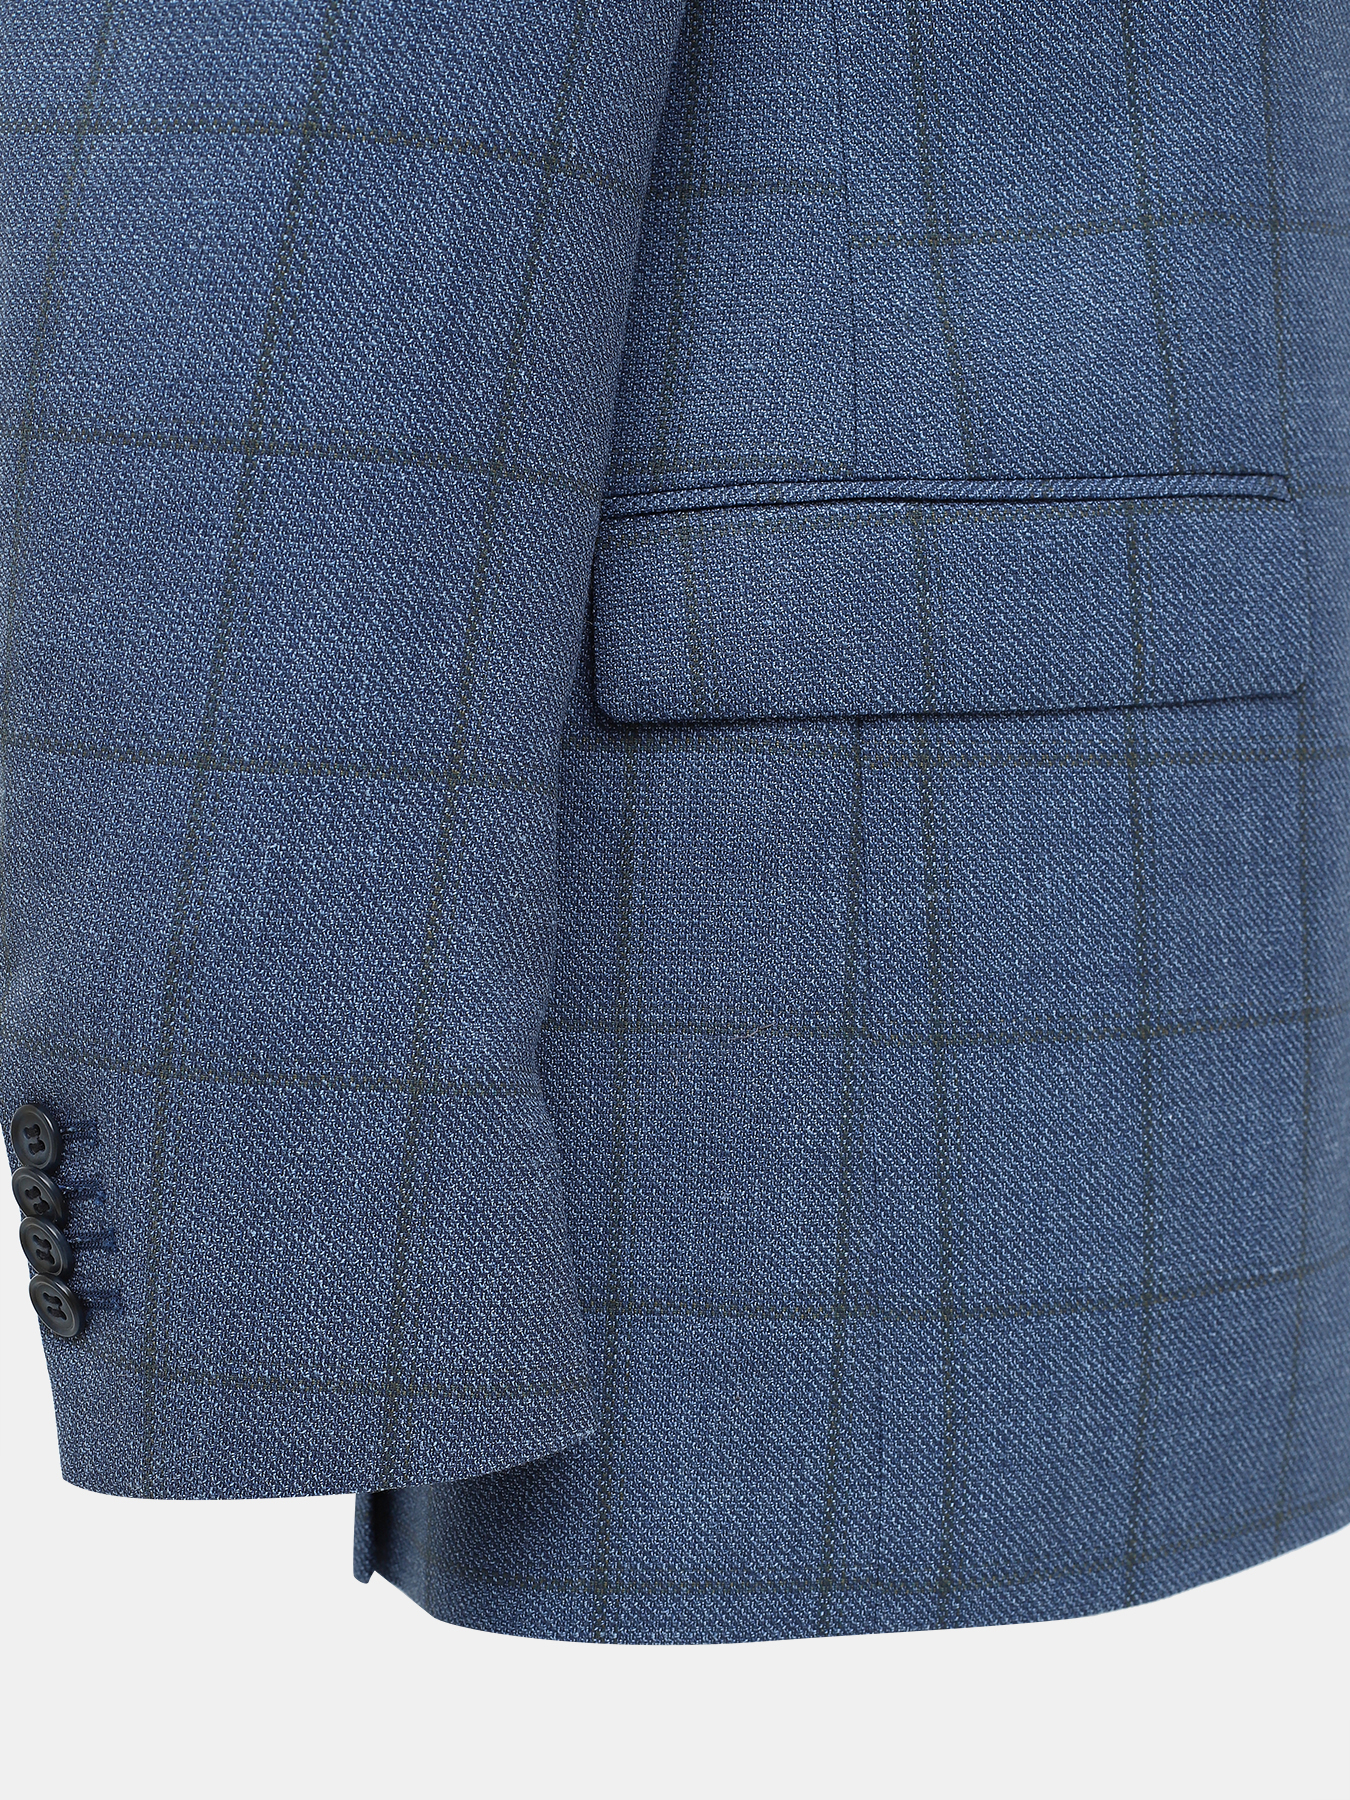 Пиджак Alessandro Manzoni 421118-390, цвет синий, размер 62 - фото 2